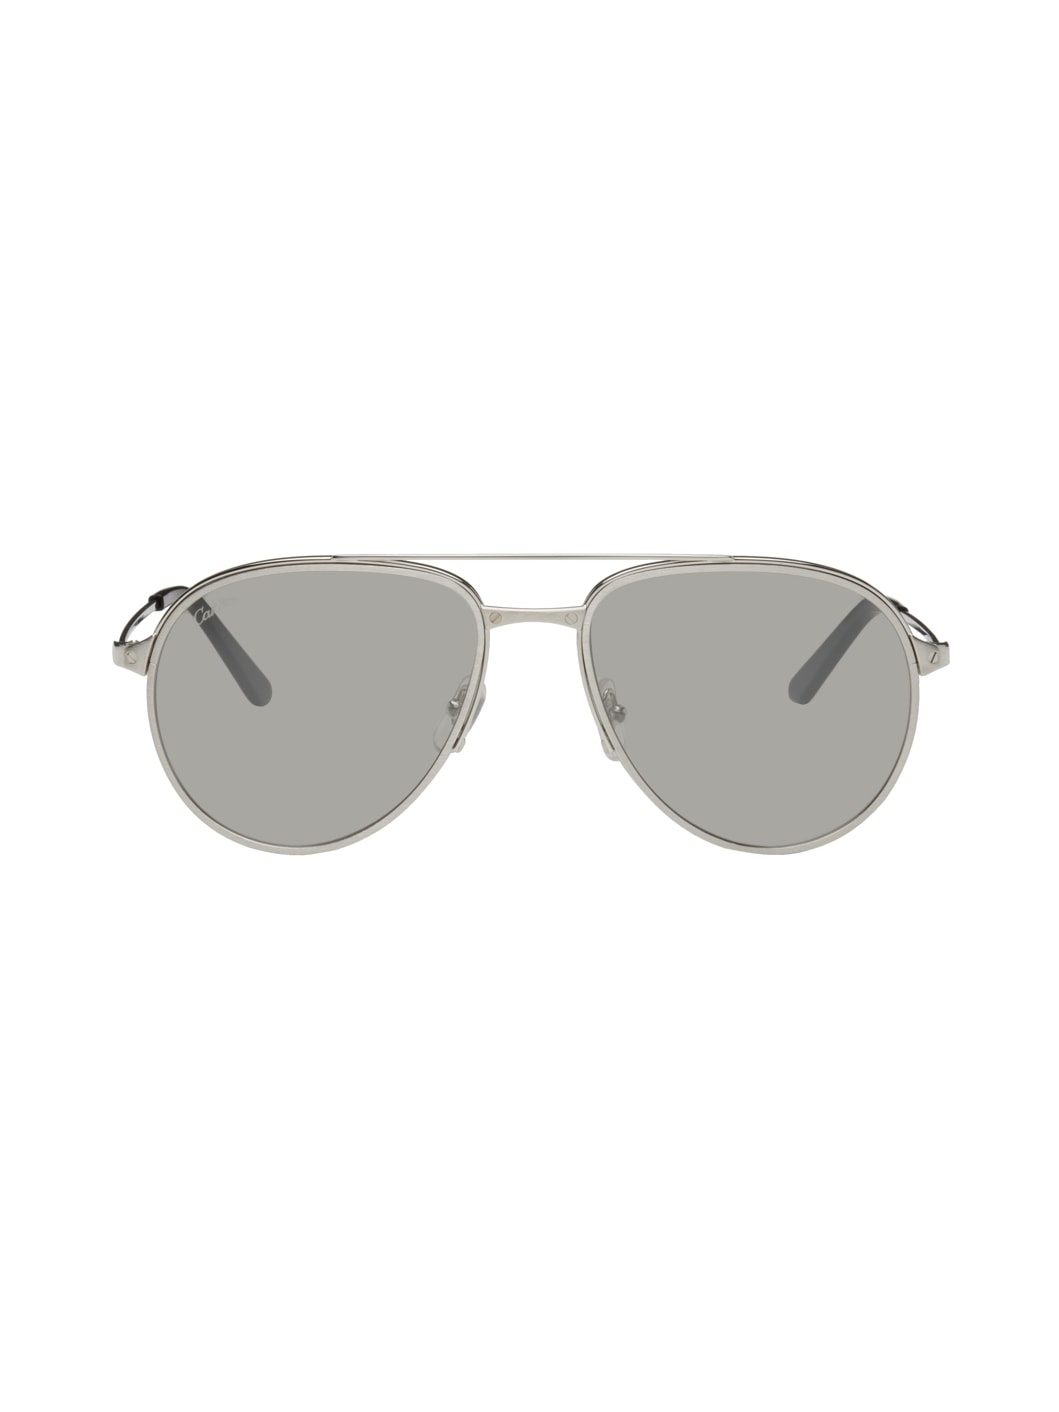 Silver Aviator Sunglasses - 1